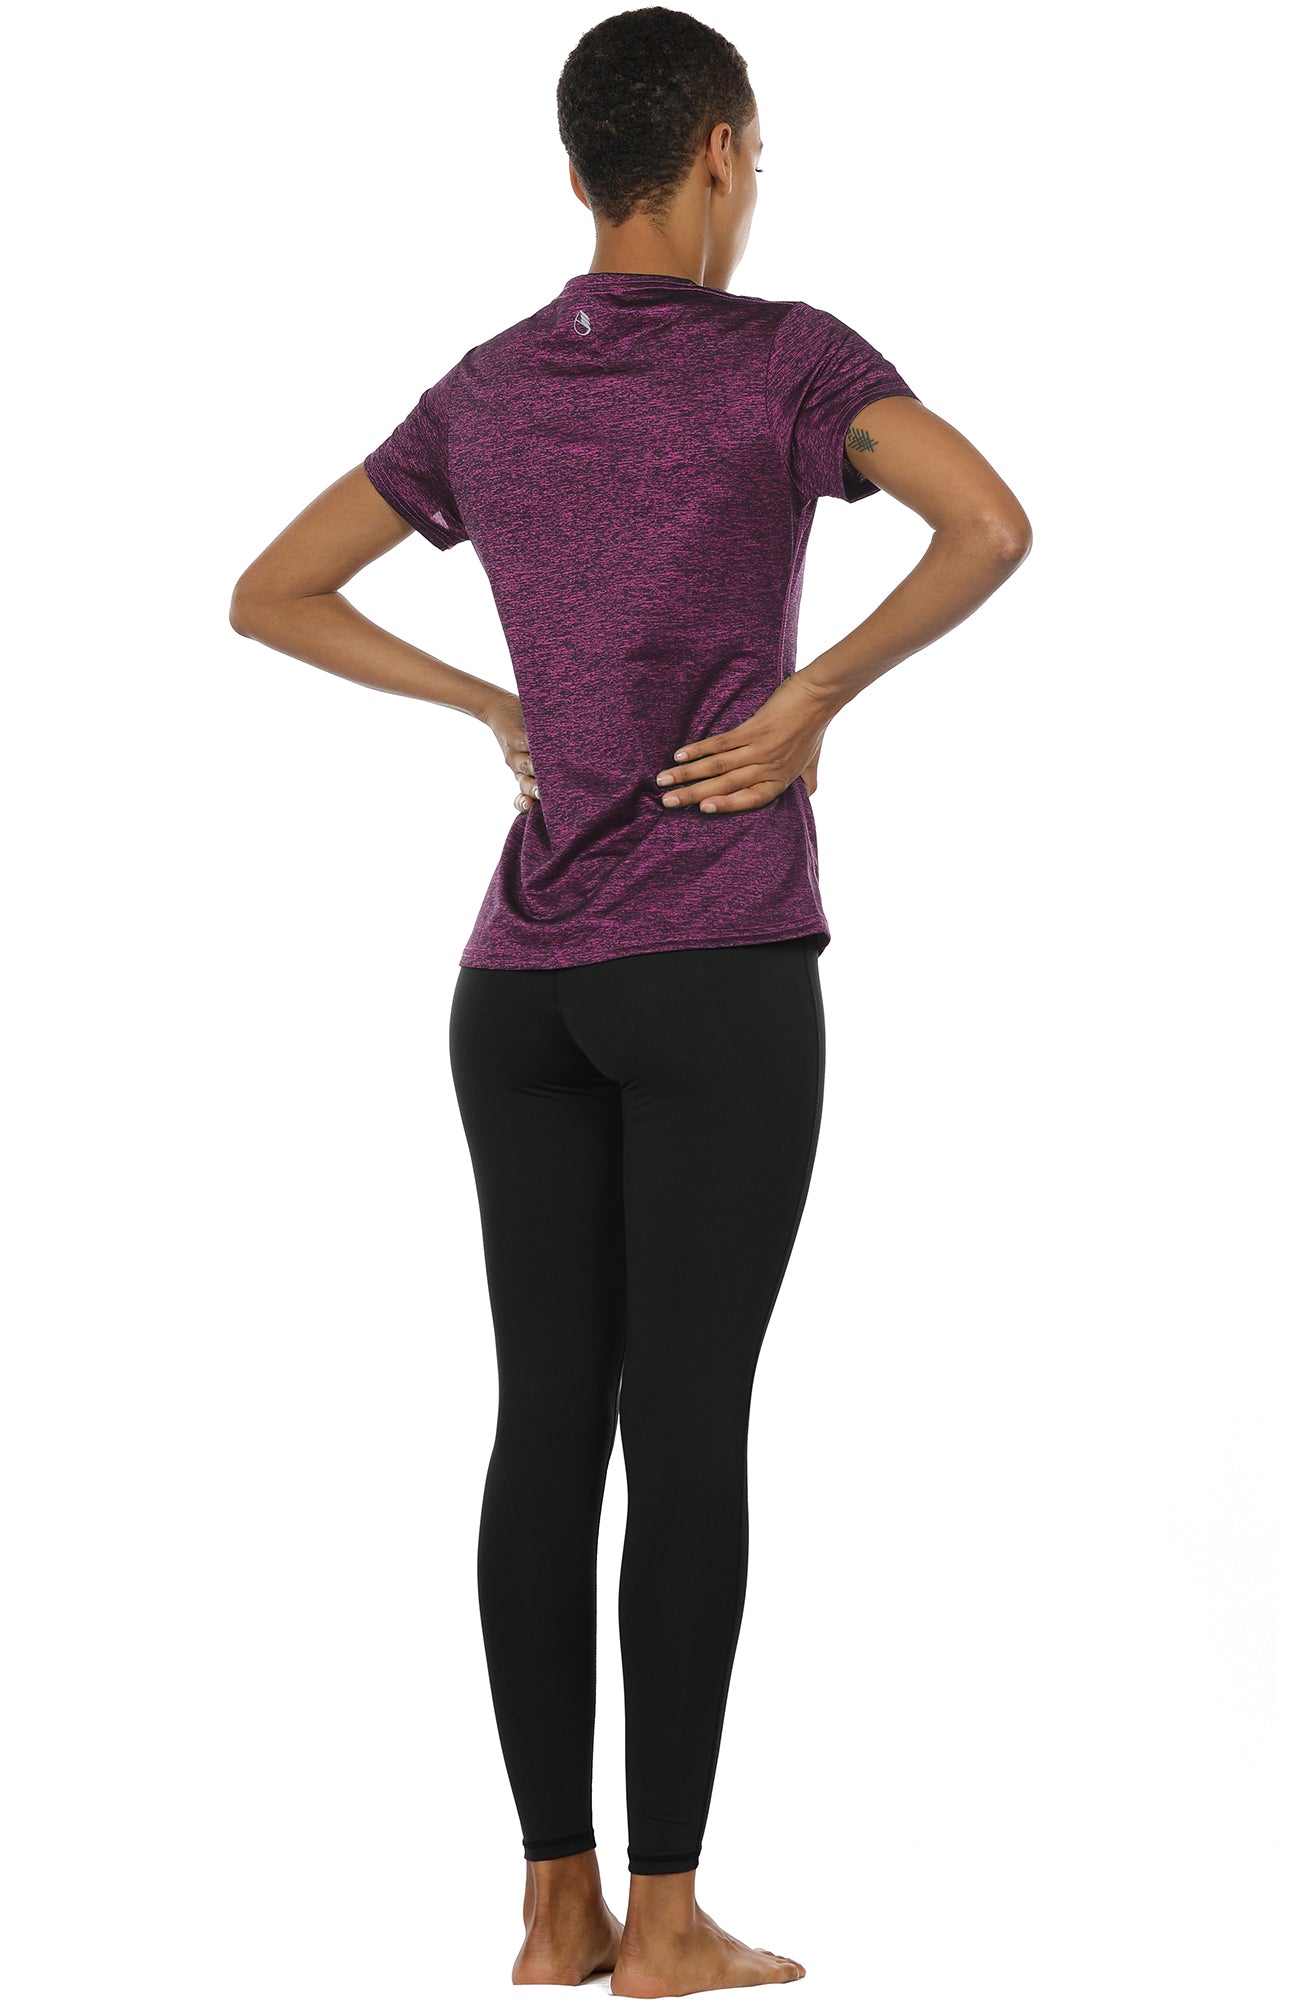  icyzone Workout T-Shirt for Women - Gym Running Yoga Tops  Athletic Shirts Raglan Short Sleeves (Aqua, Small) : Sports & Outdoors